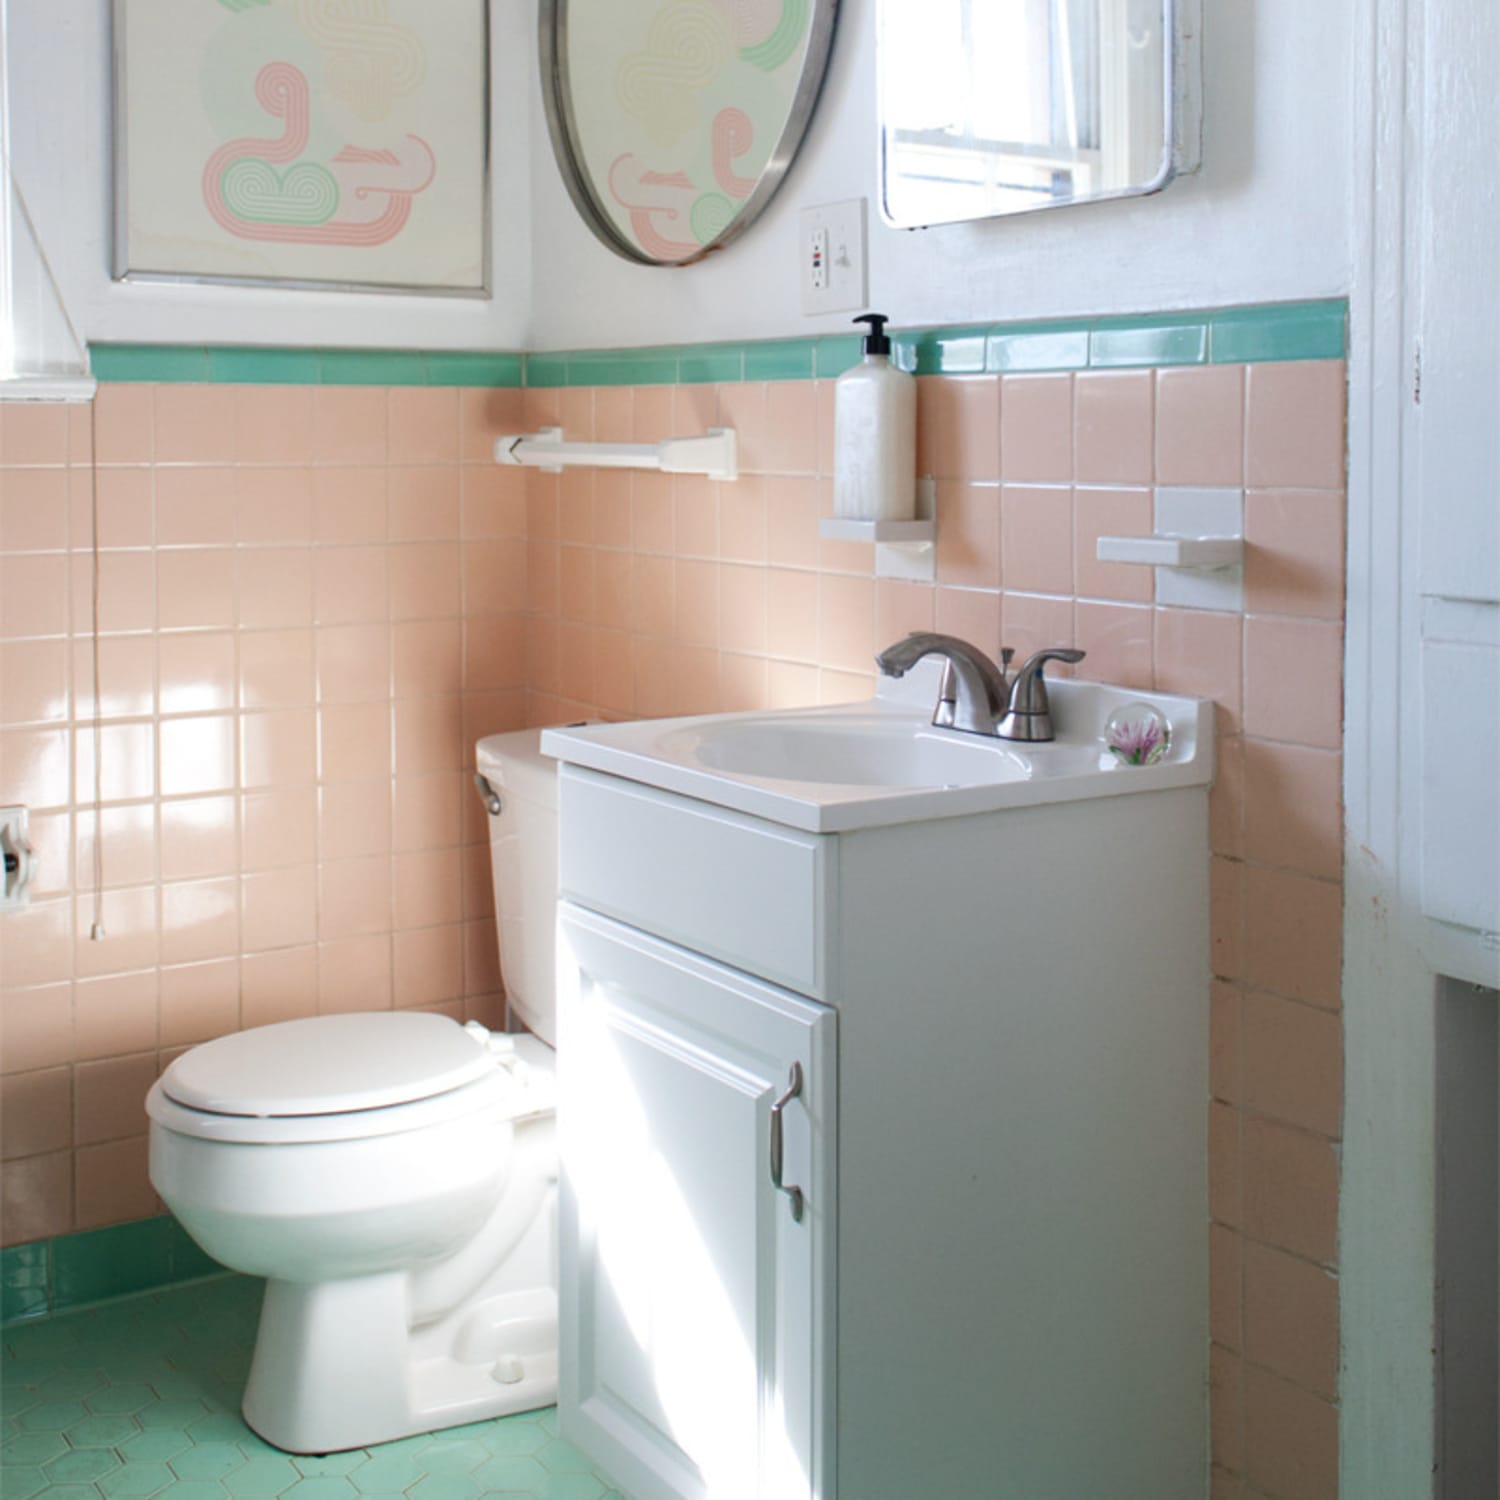 22 Vintage Bathroom Ideas With Retro Decor | Apartment Therapy